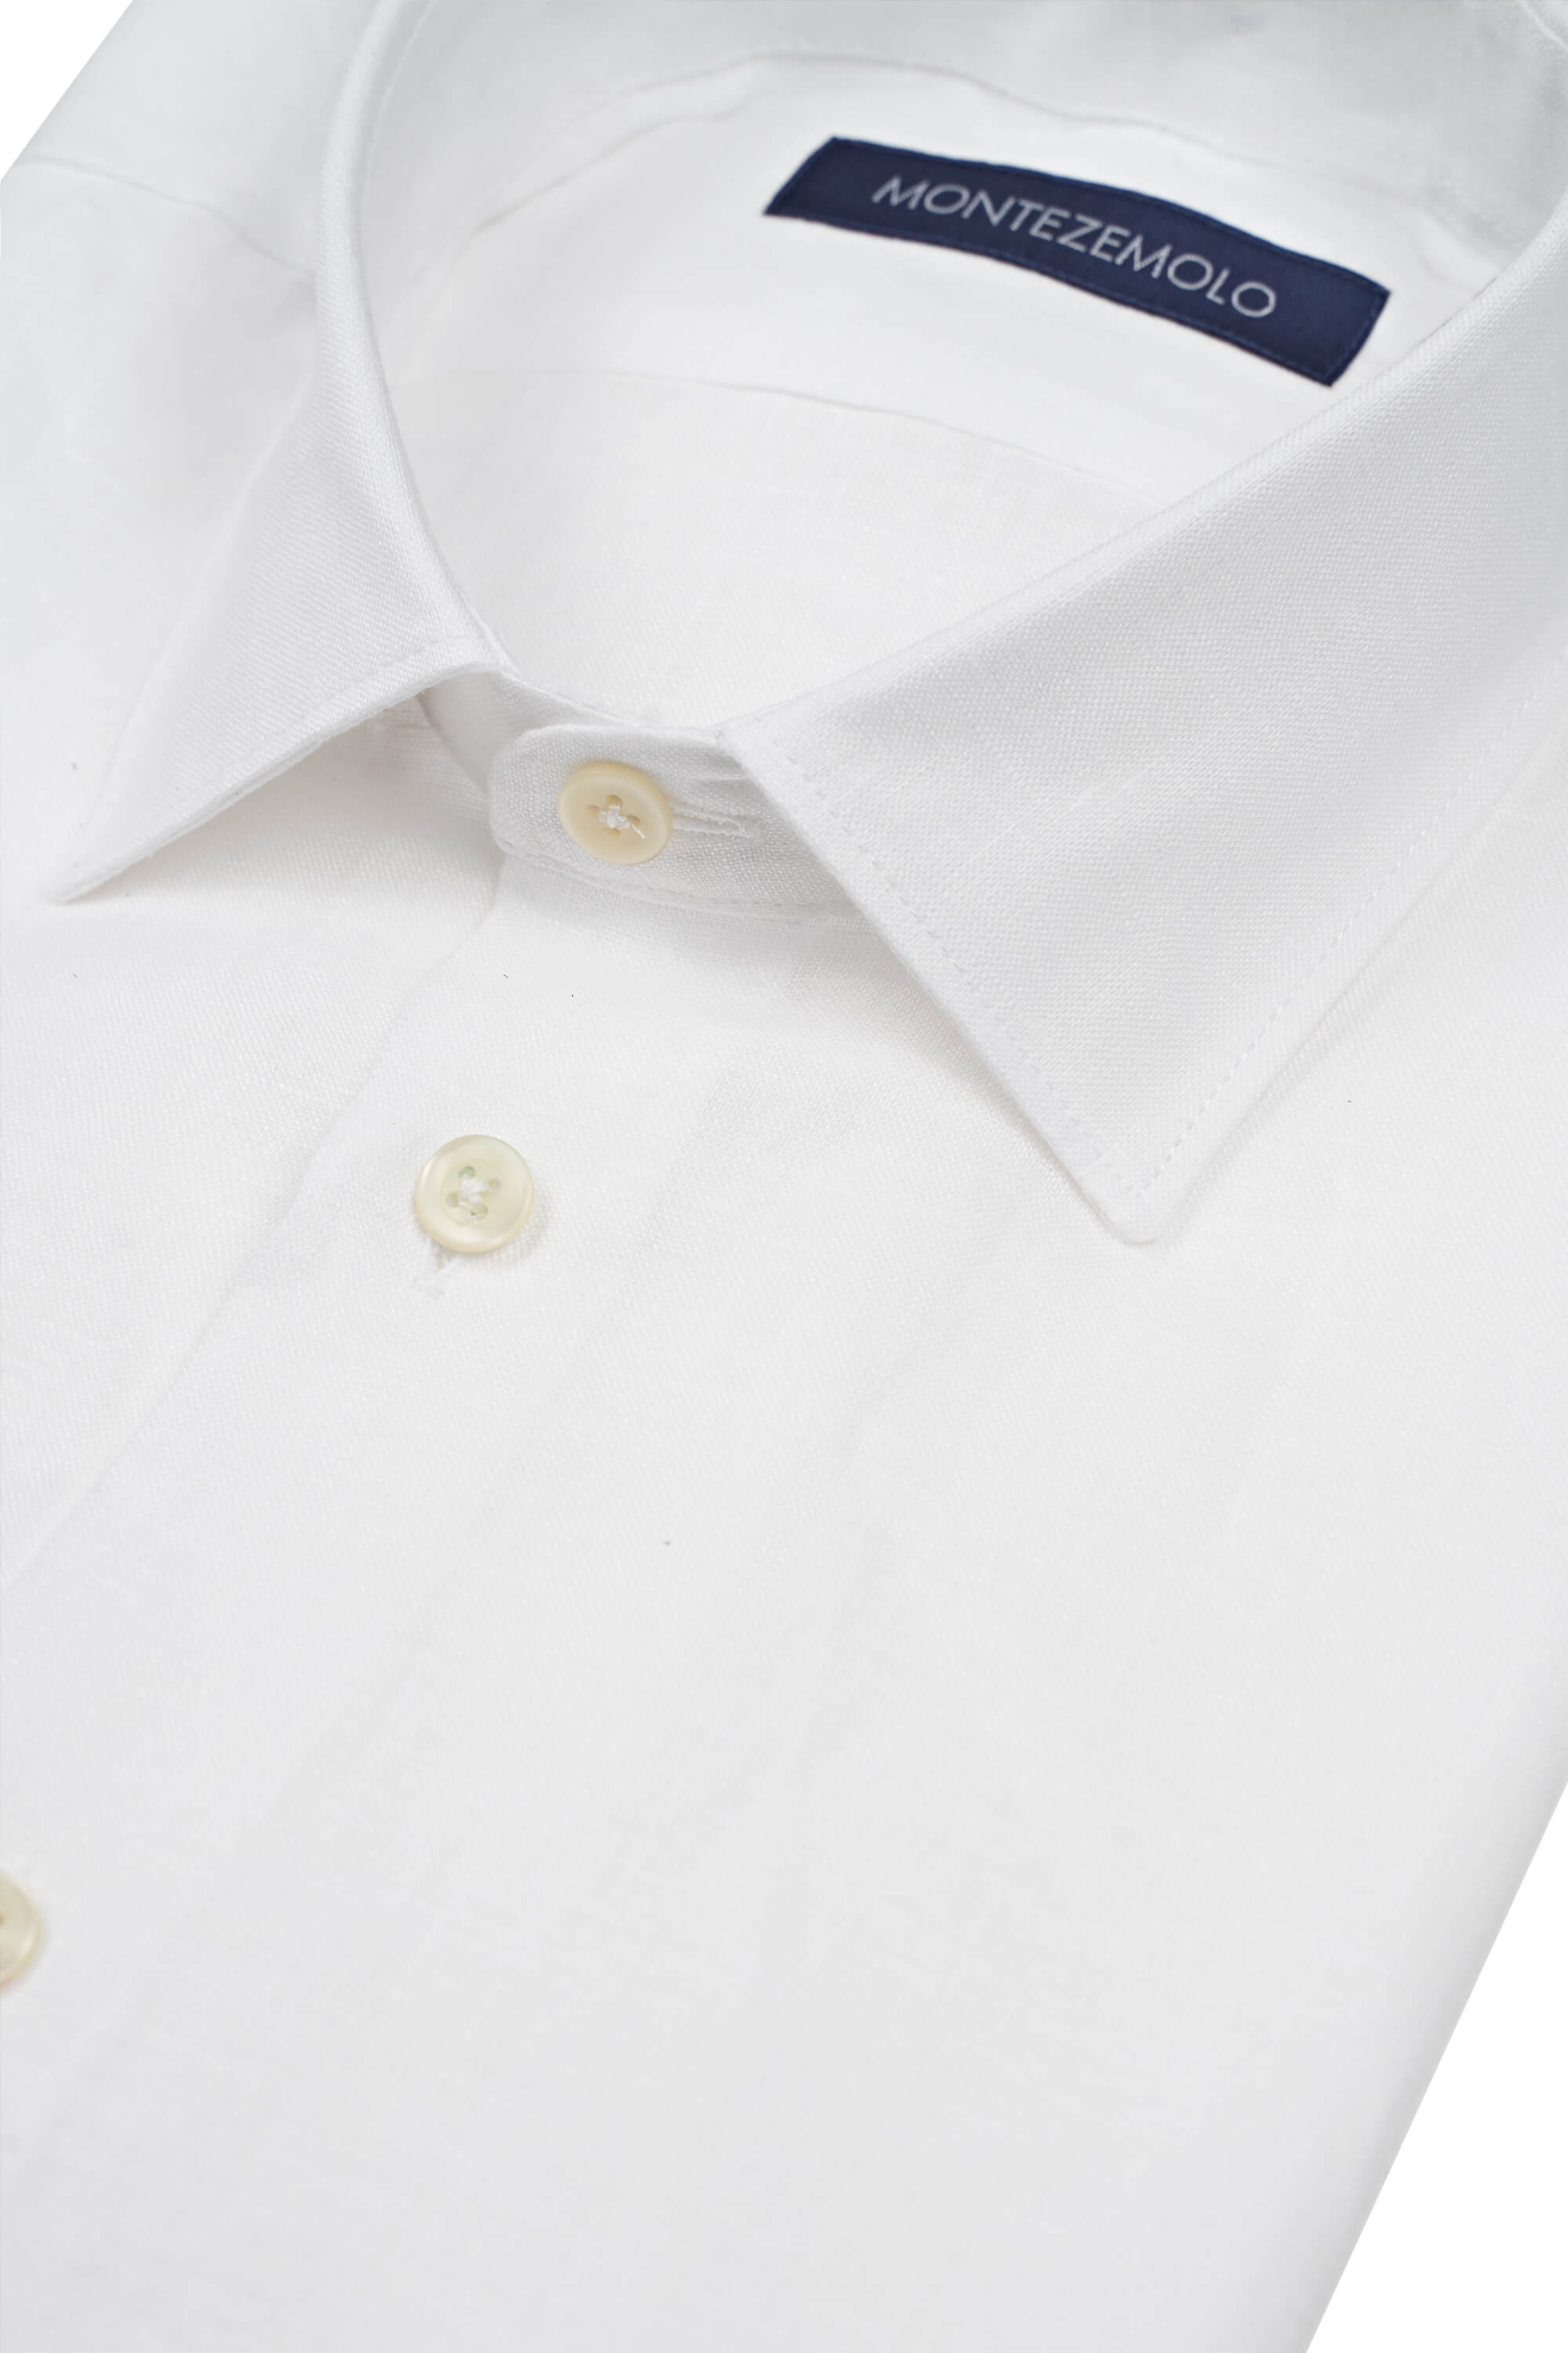 MONTEZEMOLO - Pure Linen Shirt